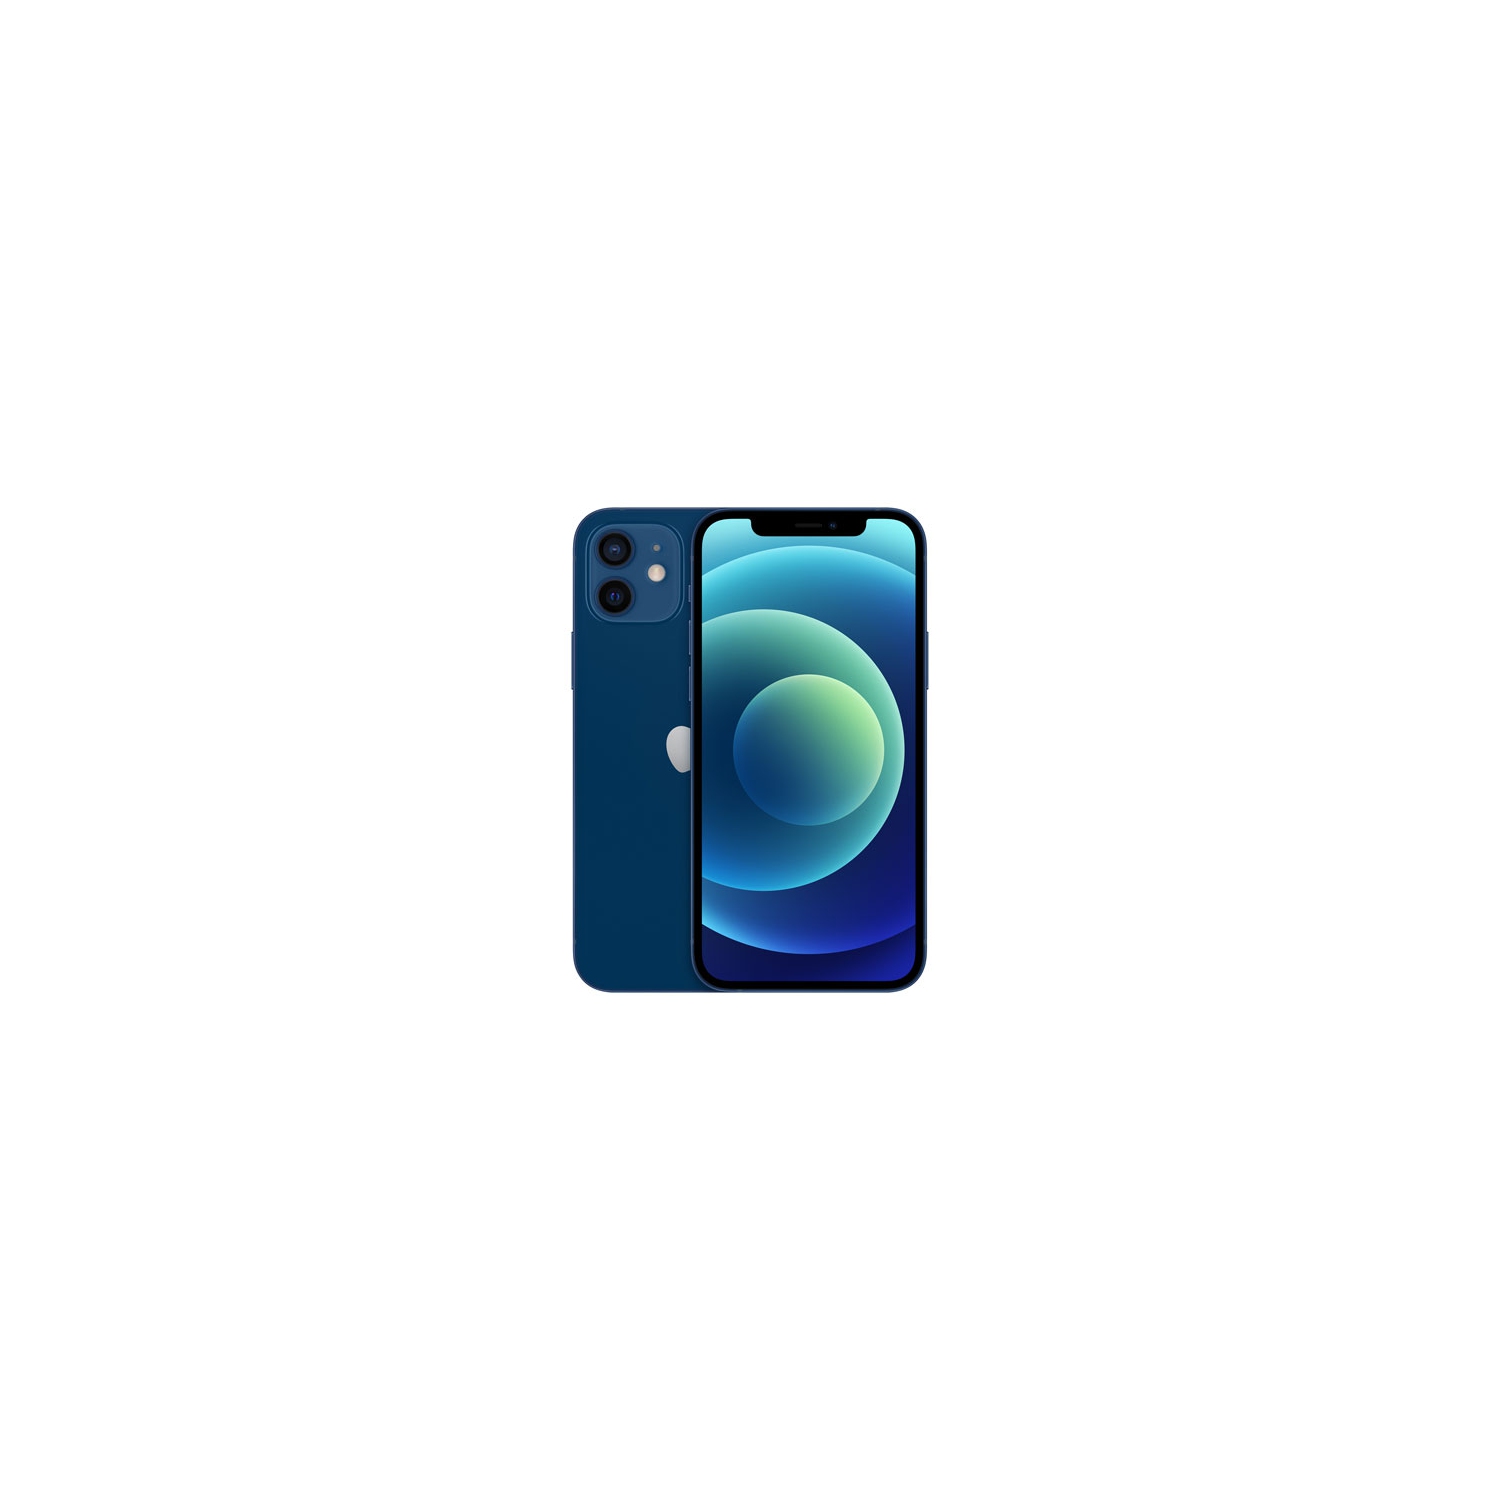 Refurbished (Excellent) - Apple iPhone 12 64GB Smartphone - Blue - Unlocked - Certified Refurbished